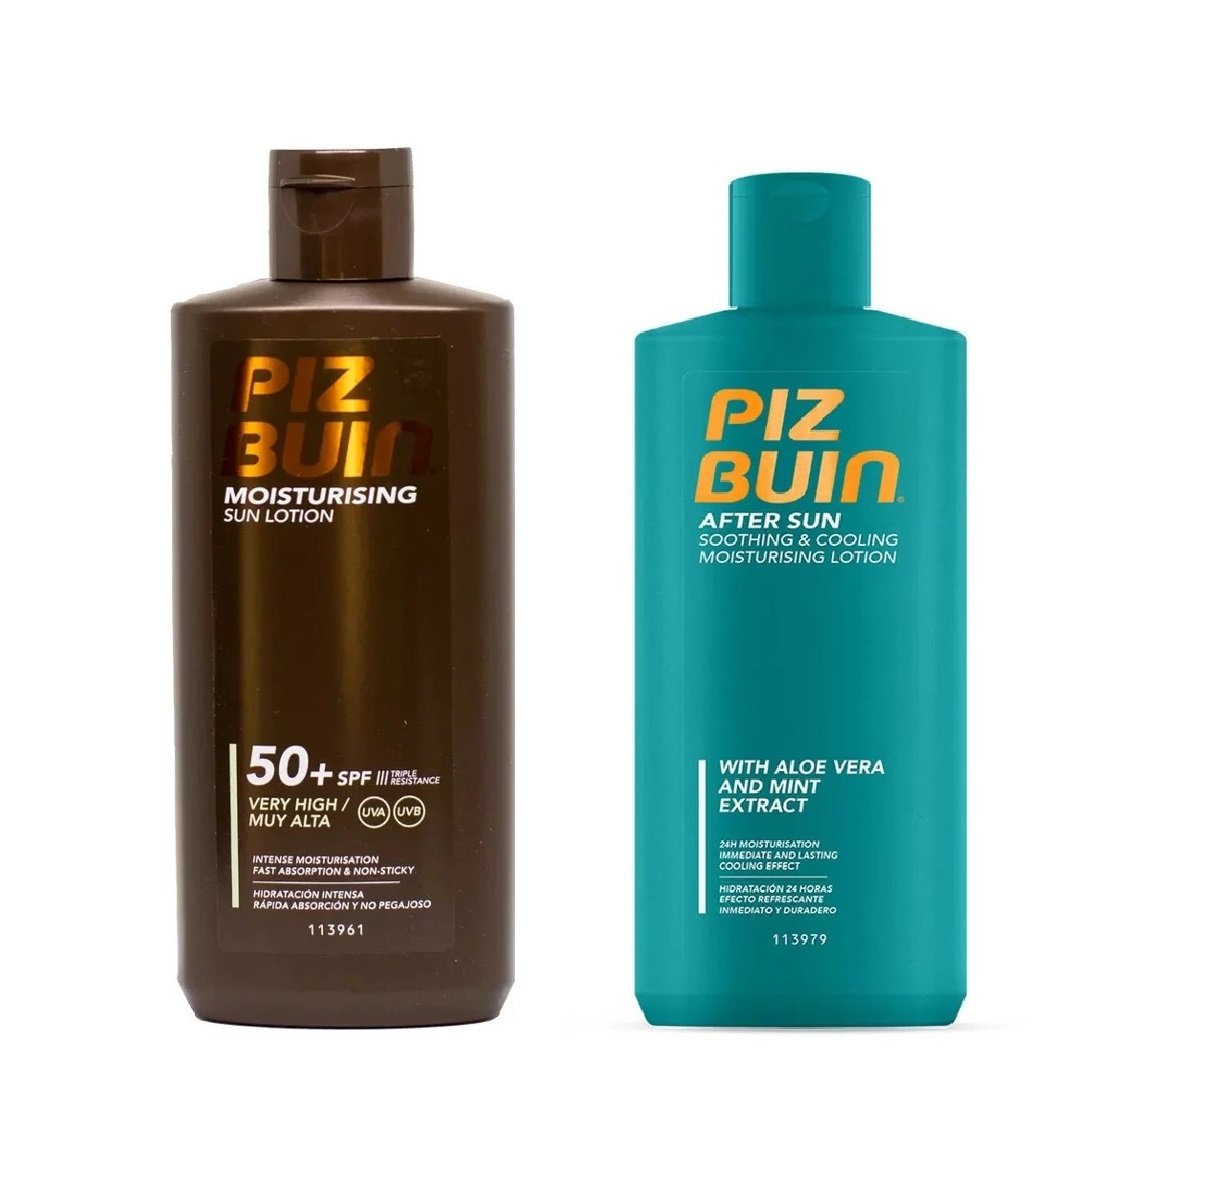 PIZ BUIN - Moisturising Sun Lotion SPF 50+ 200 ml + PIZ BUIN - After Sun Soothing & Cooling Moisturising Lotion 200 ml